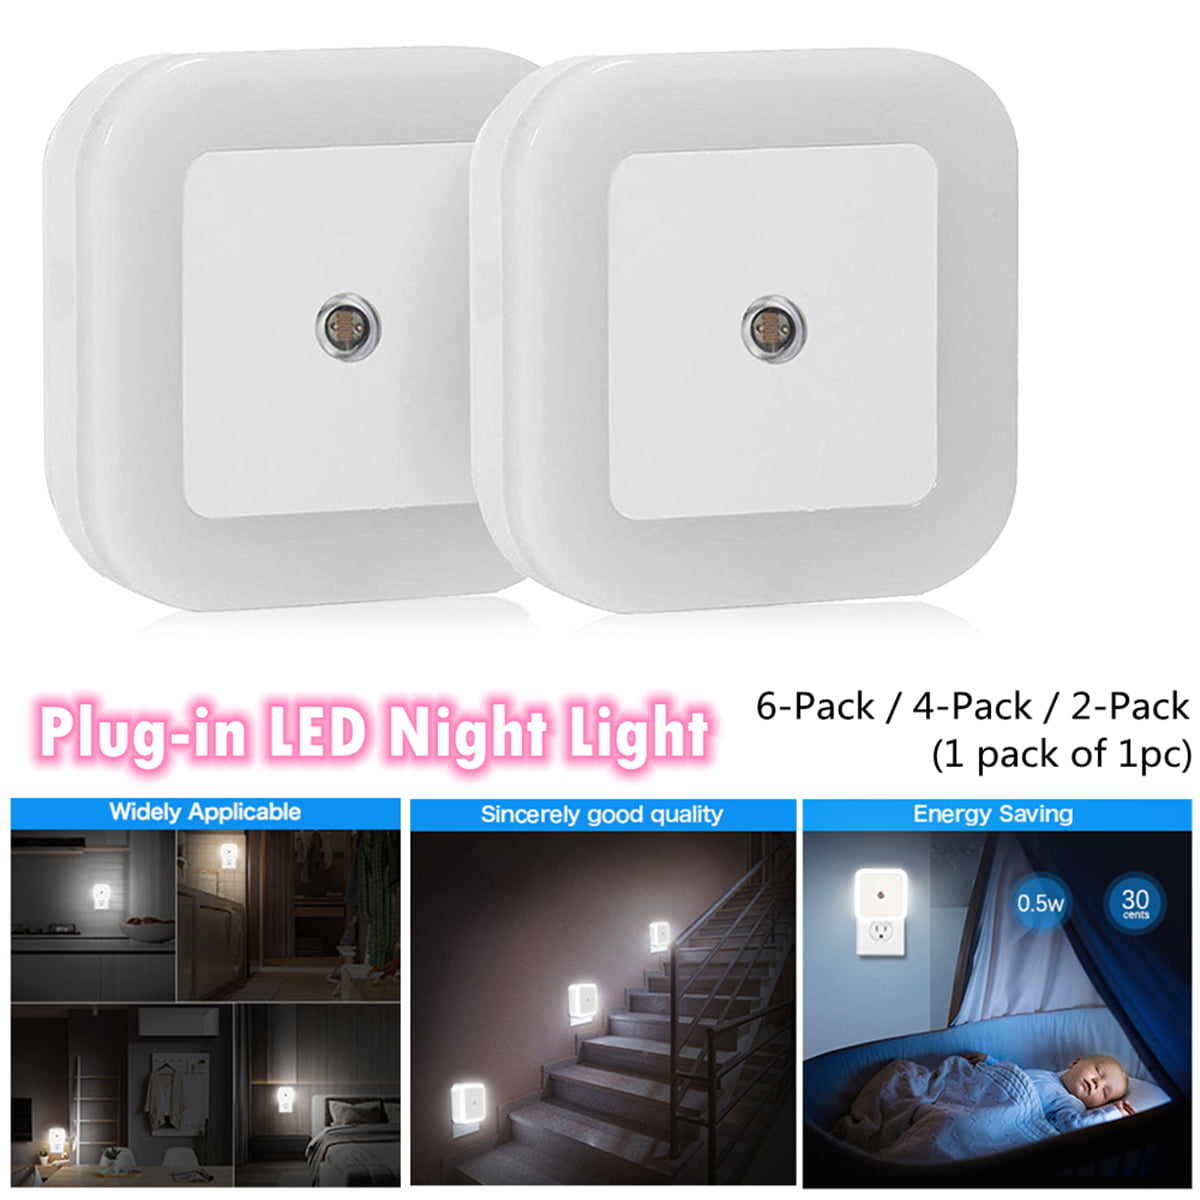 1-3 Pcs Auto Sensor Control Plug-in Night LED Light For Hallway Bedroom kitchen 